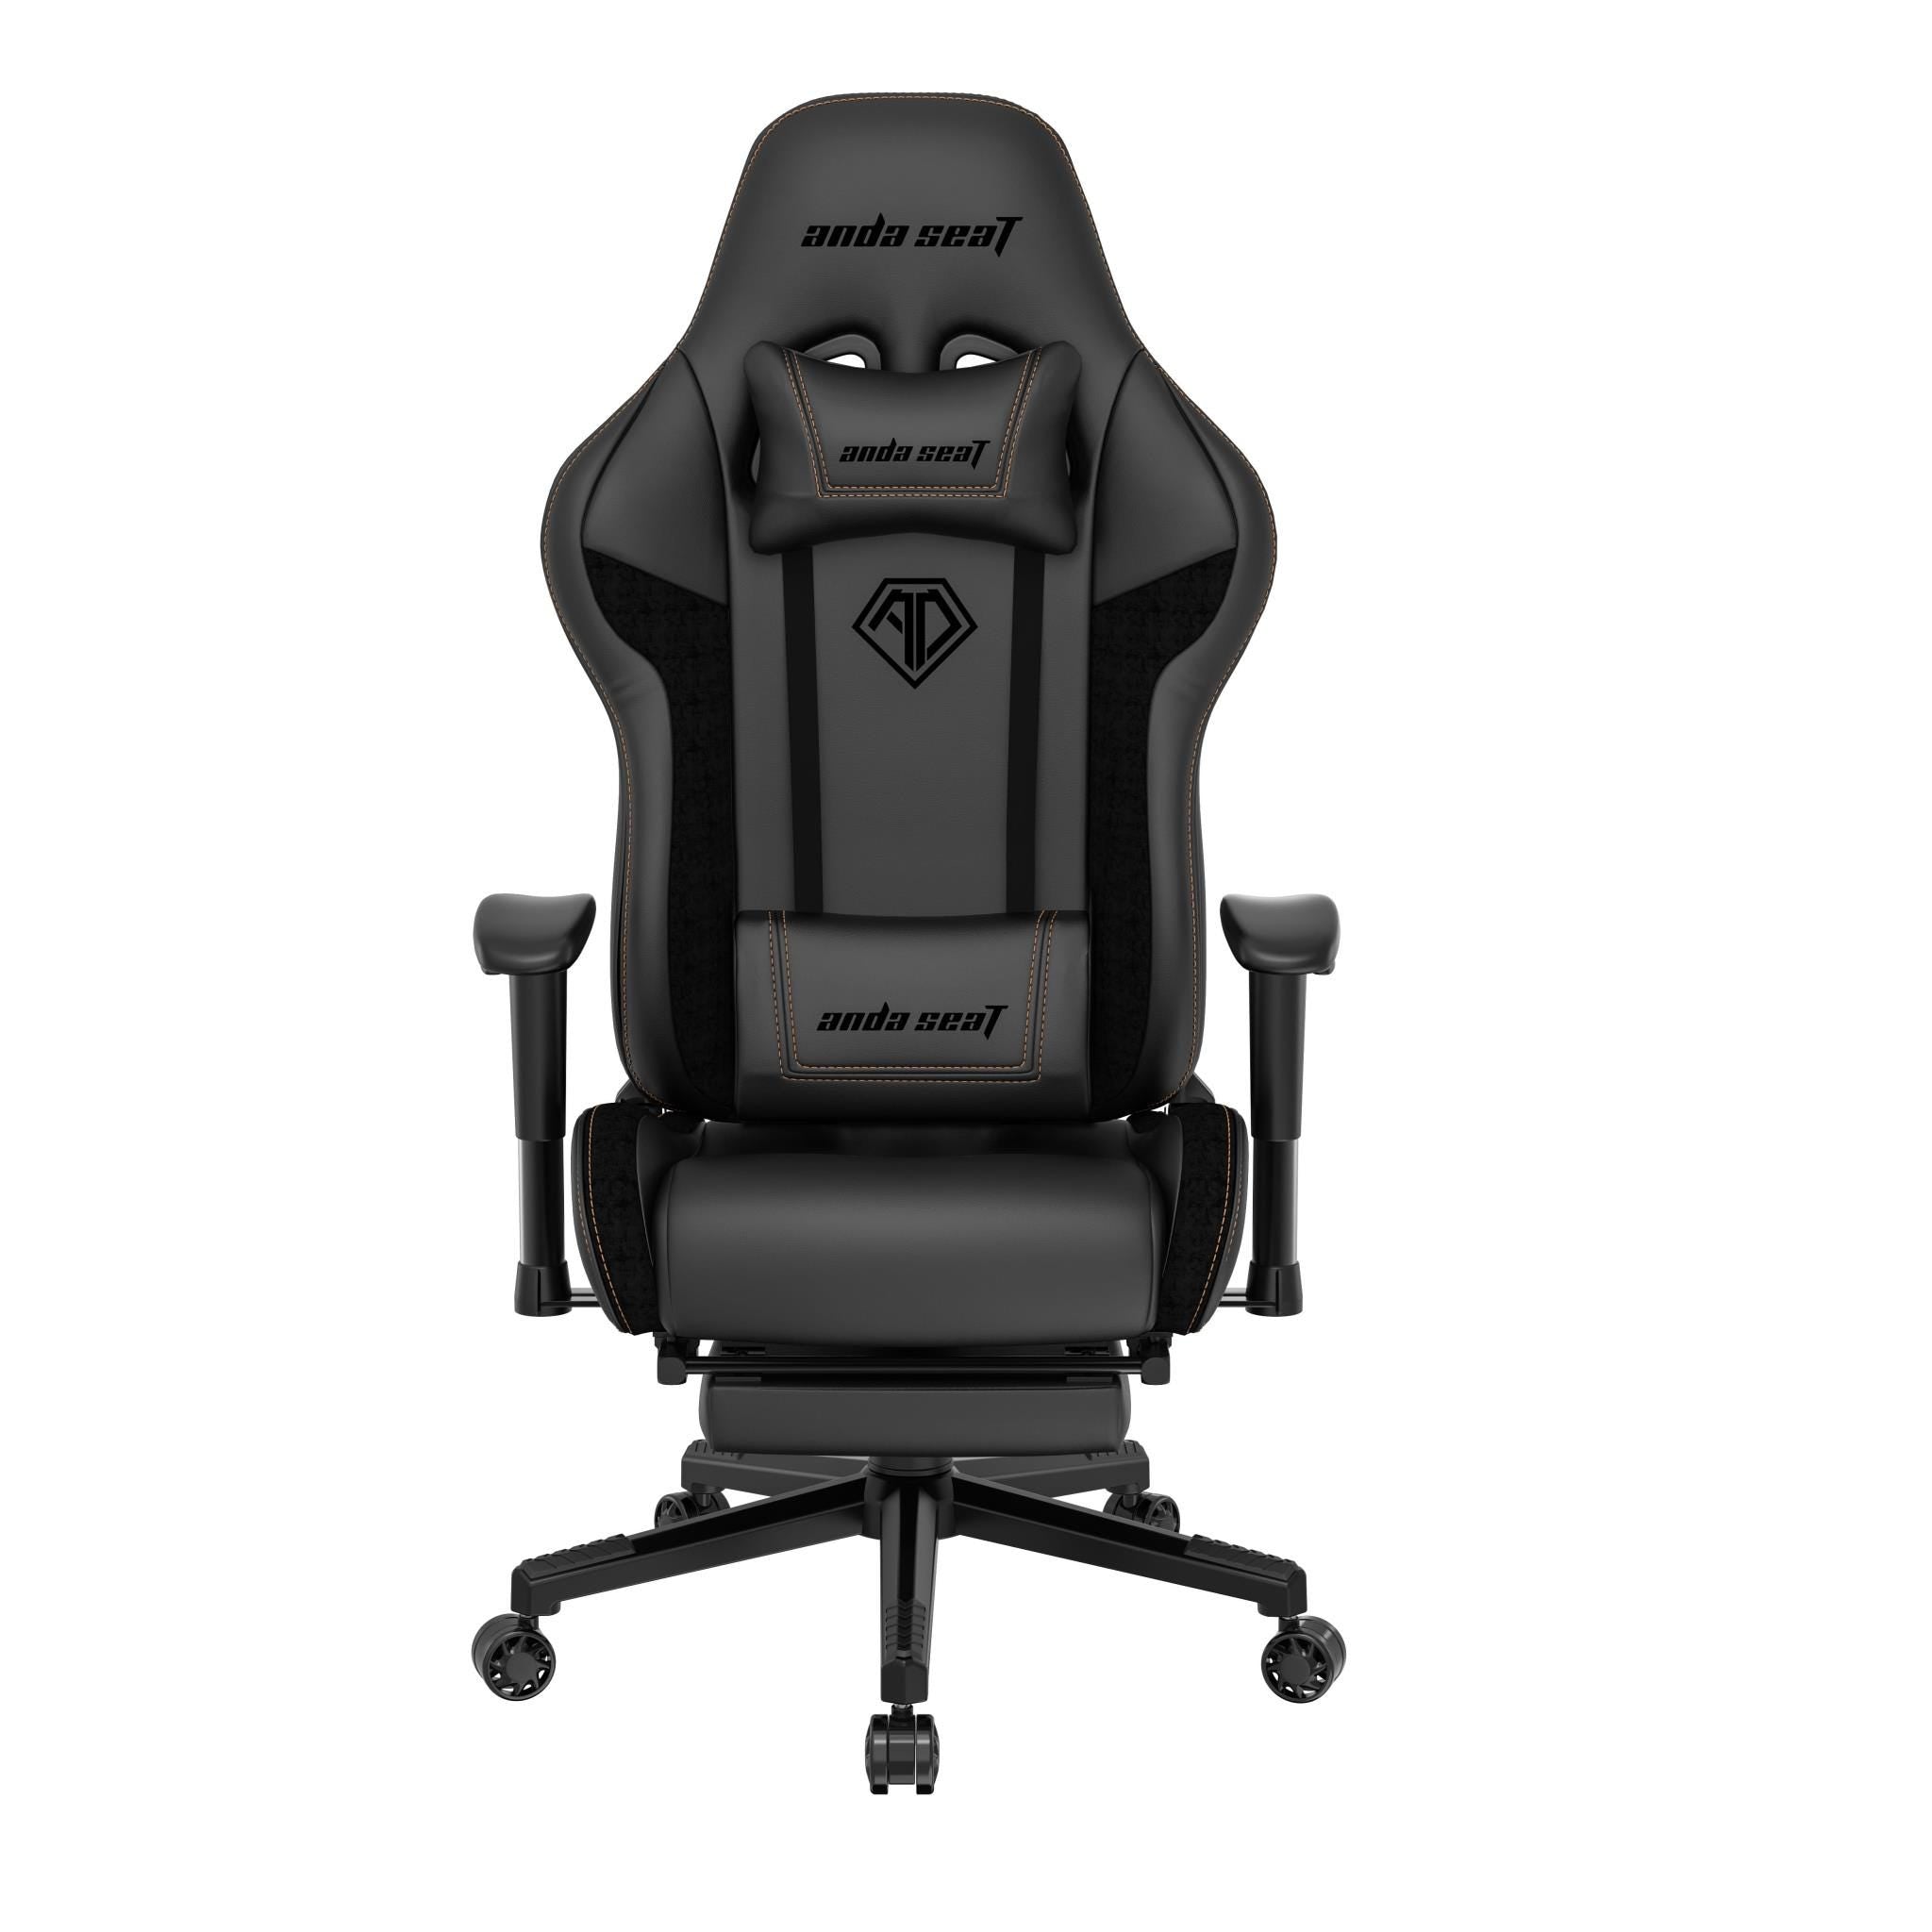 Anda Seat Jungle 2 Gaming Chair Black (AD5T-03-B-PVF) - Refurbished Pristine